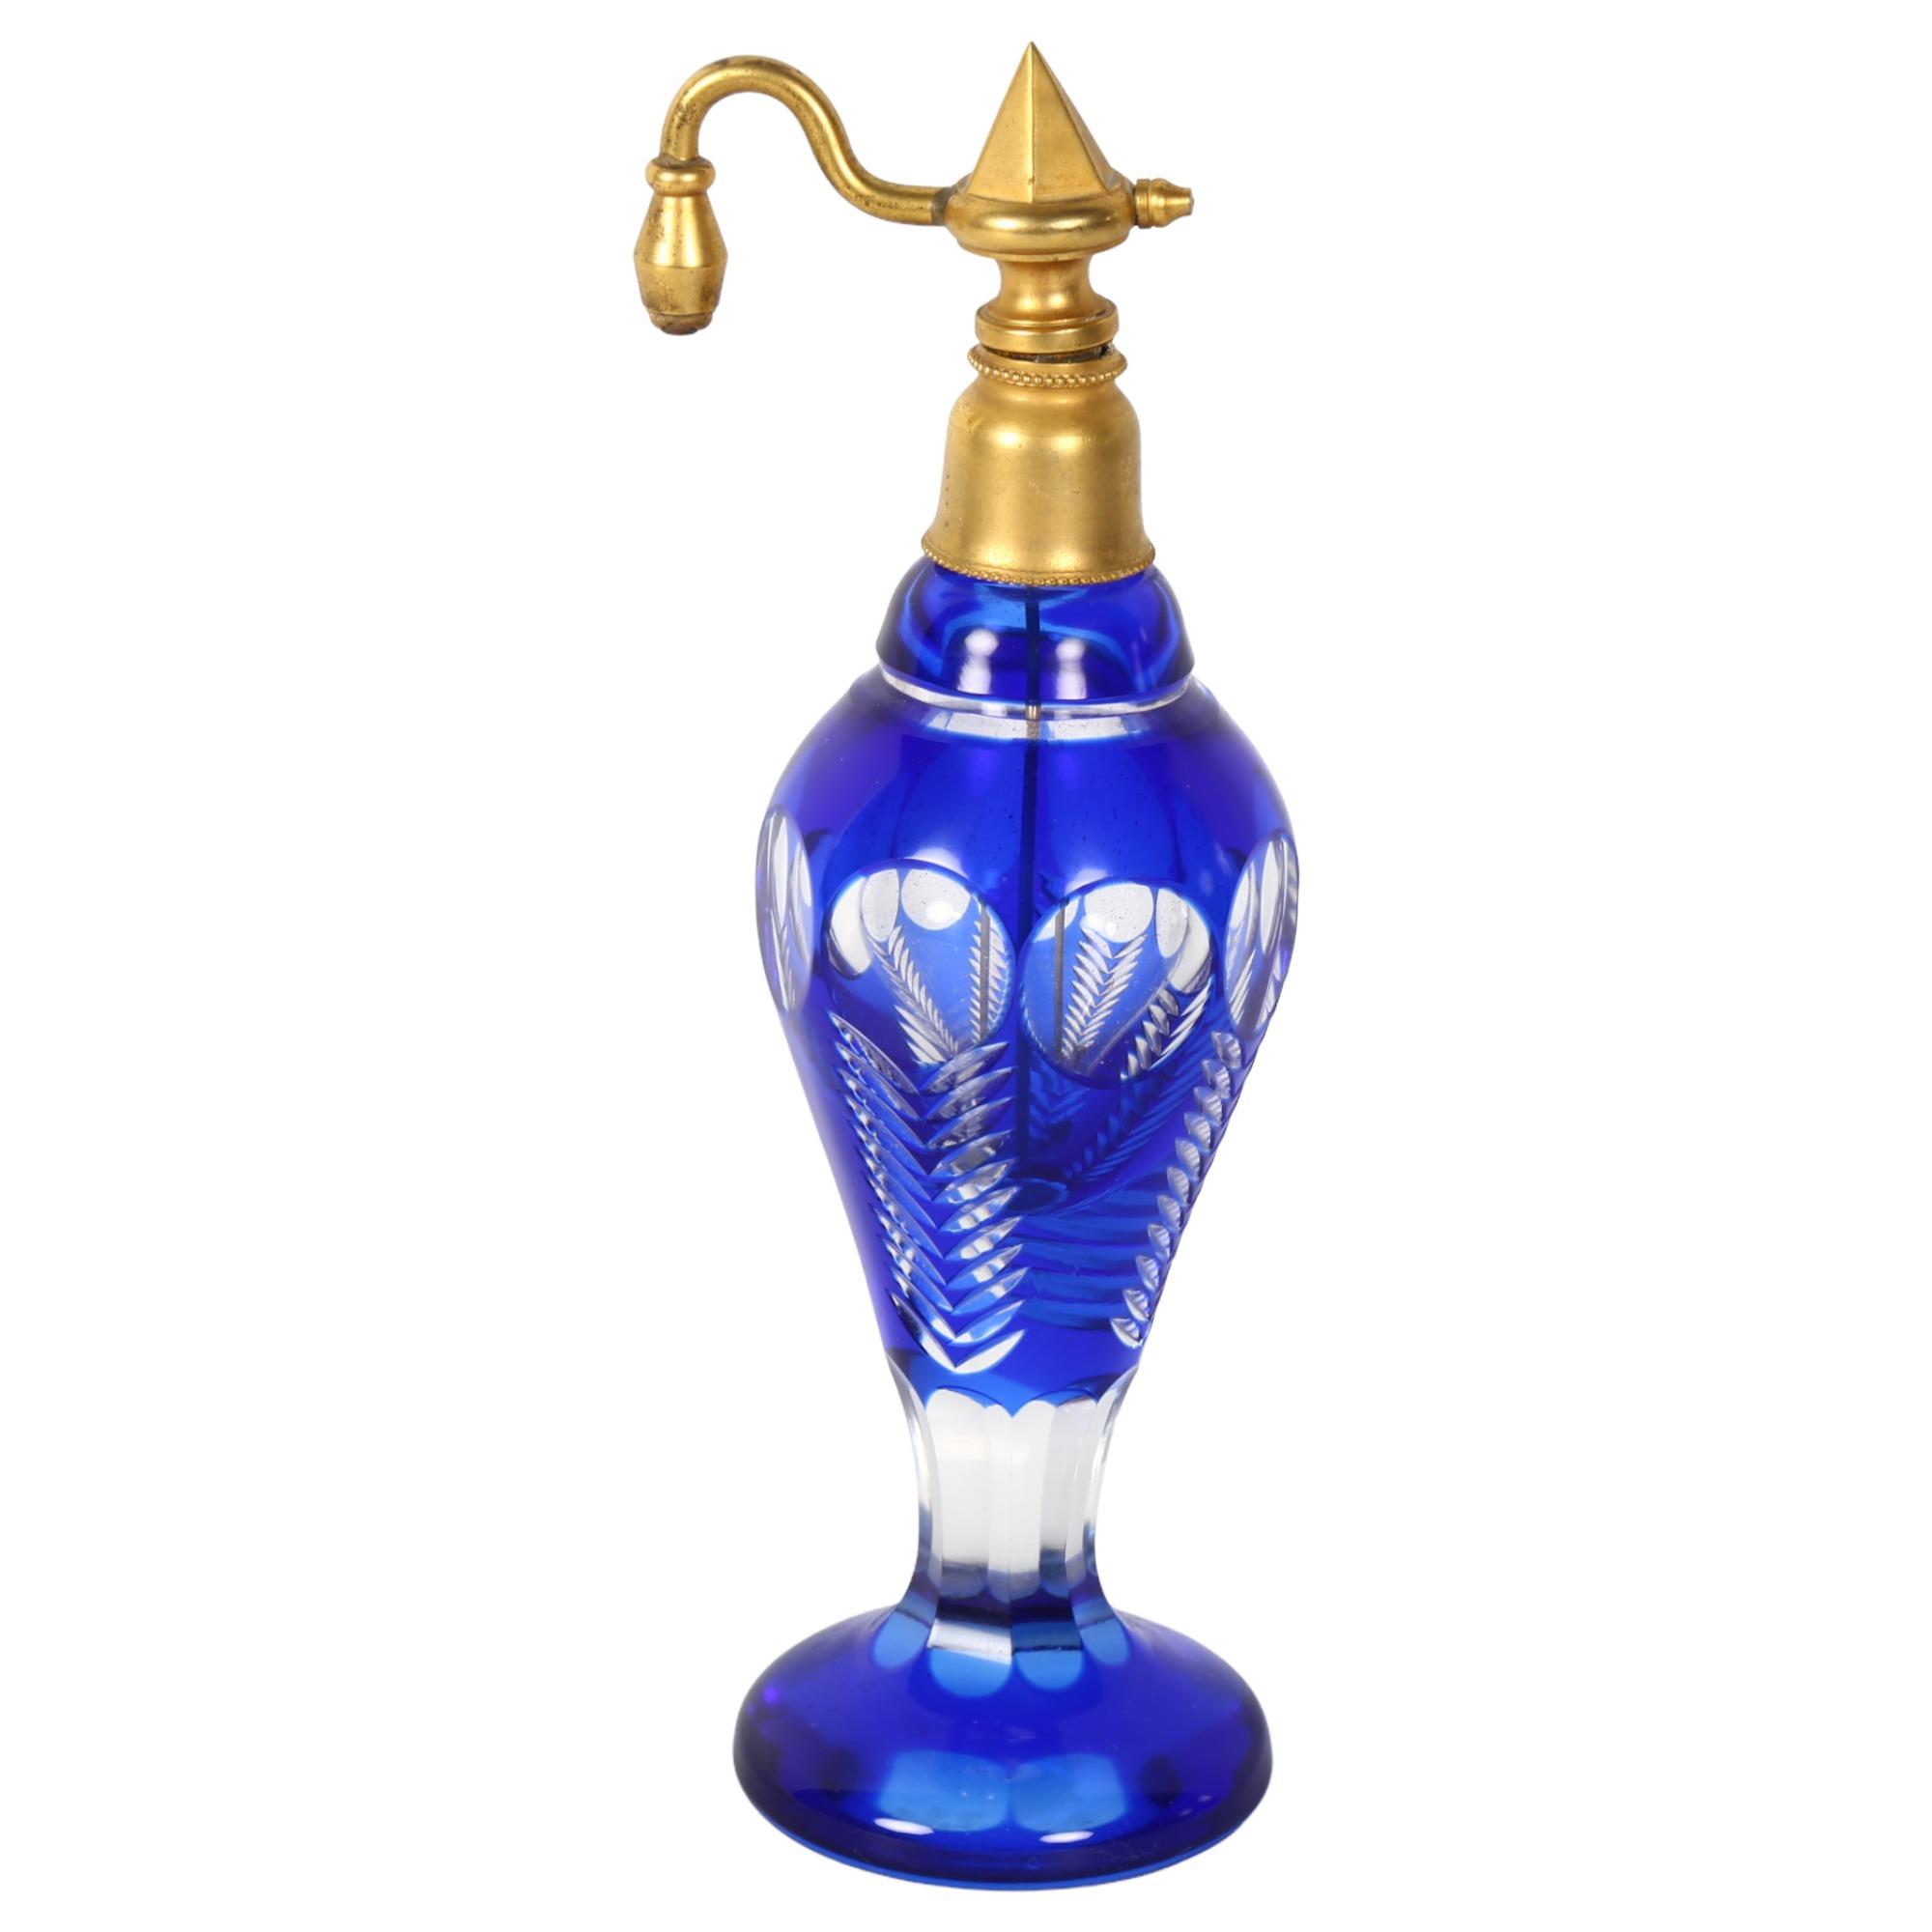 A 19th century Bristol blue overlay glass atomiser perfume bottle, height 18cm